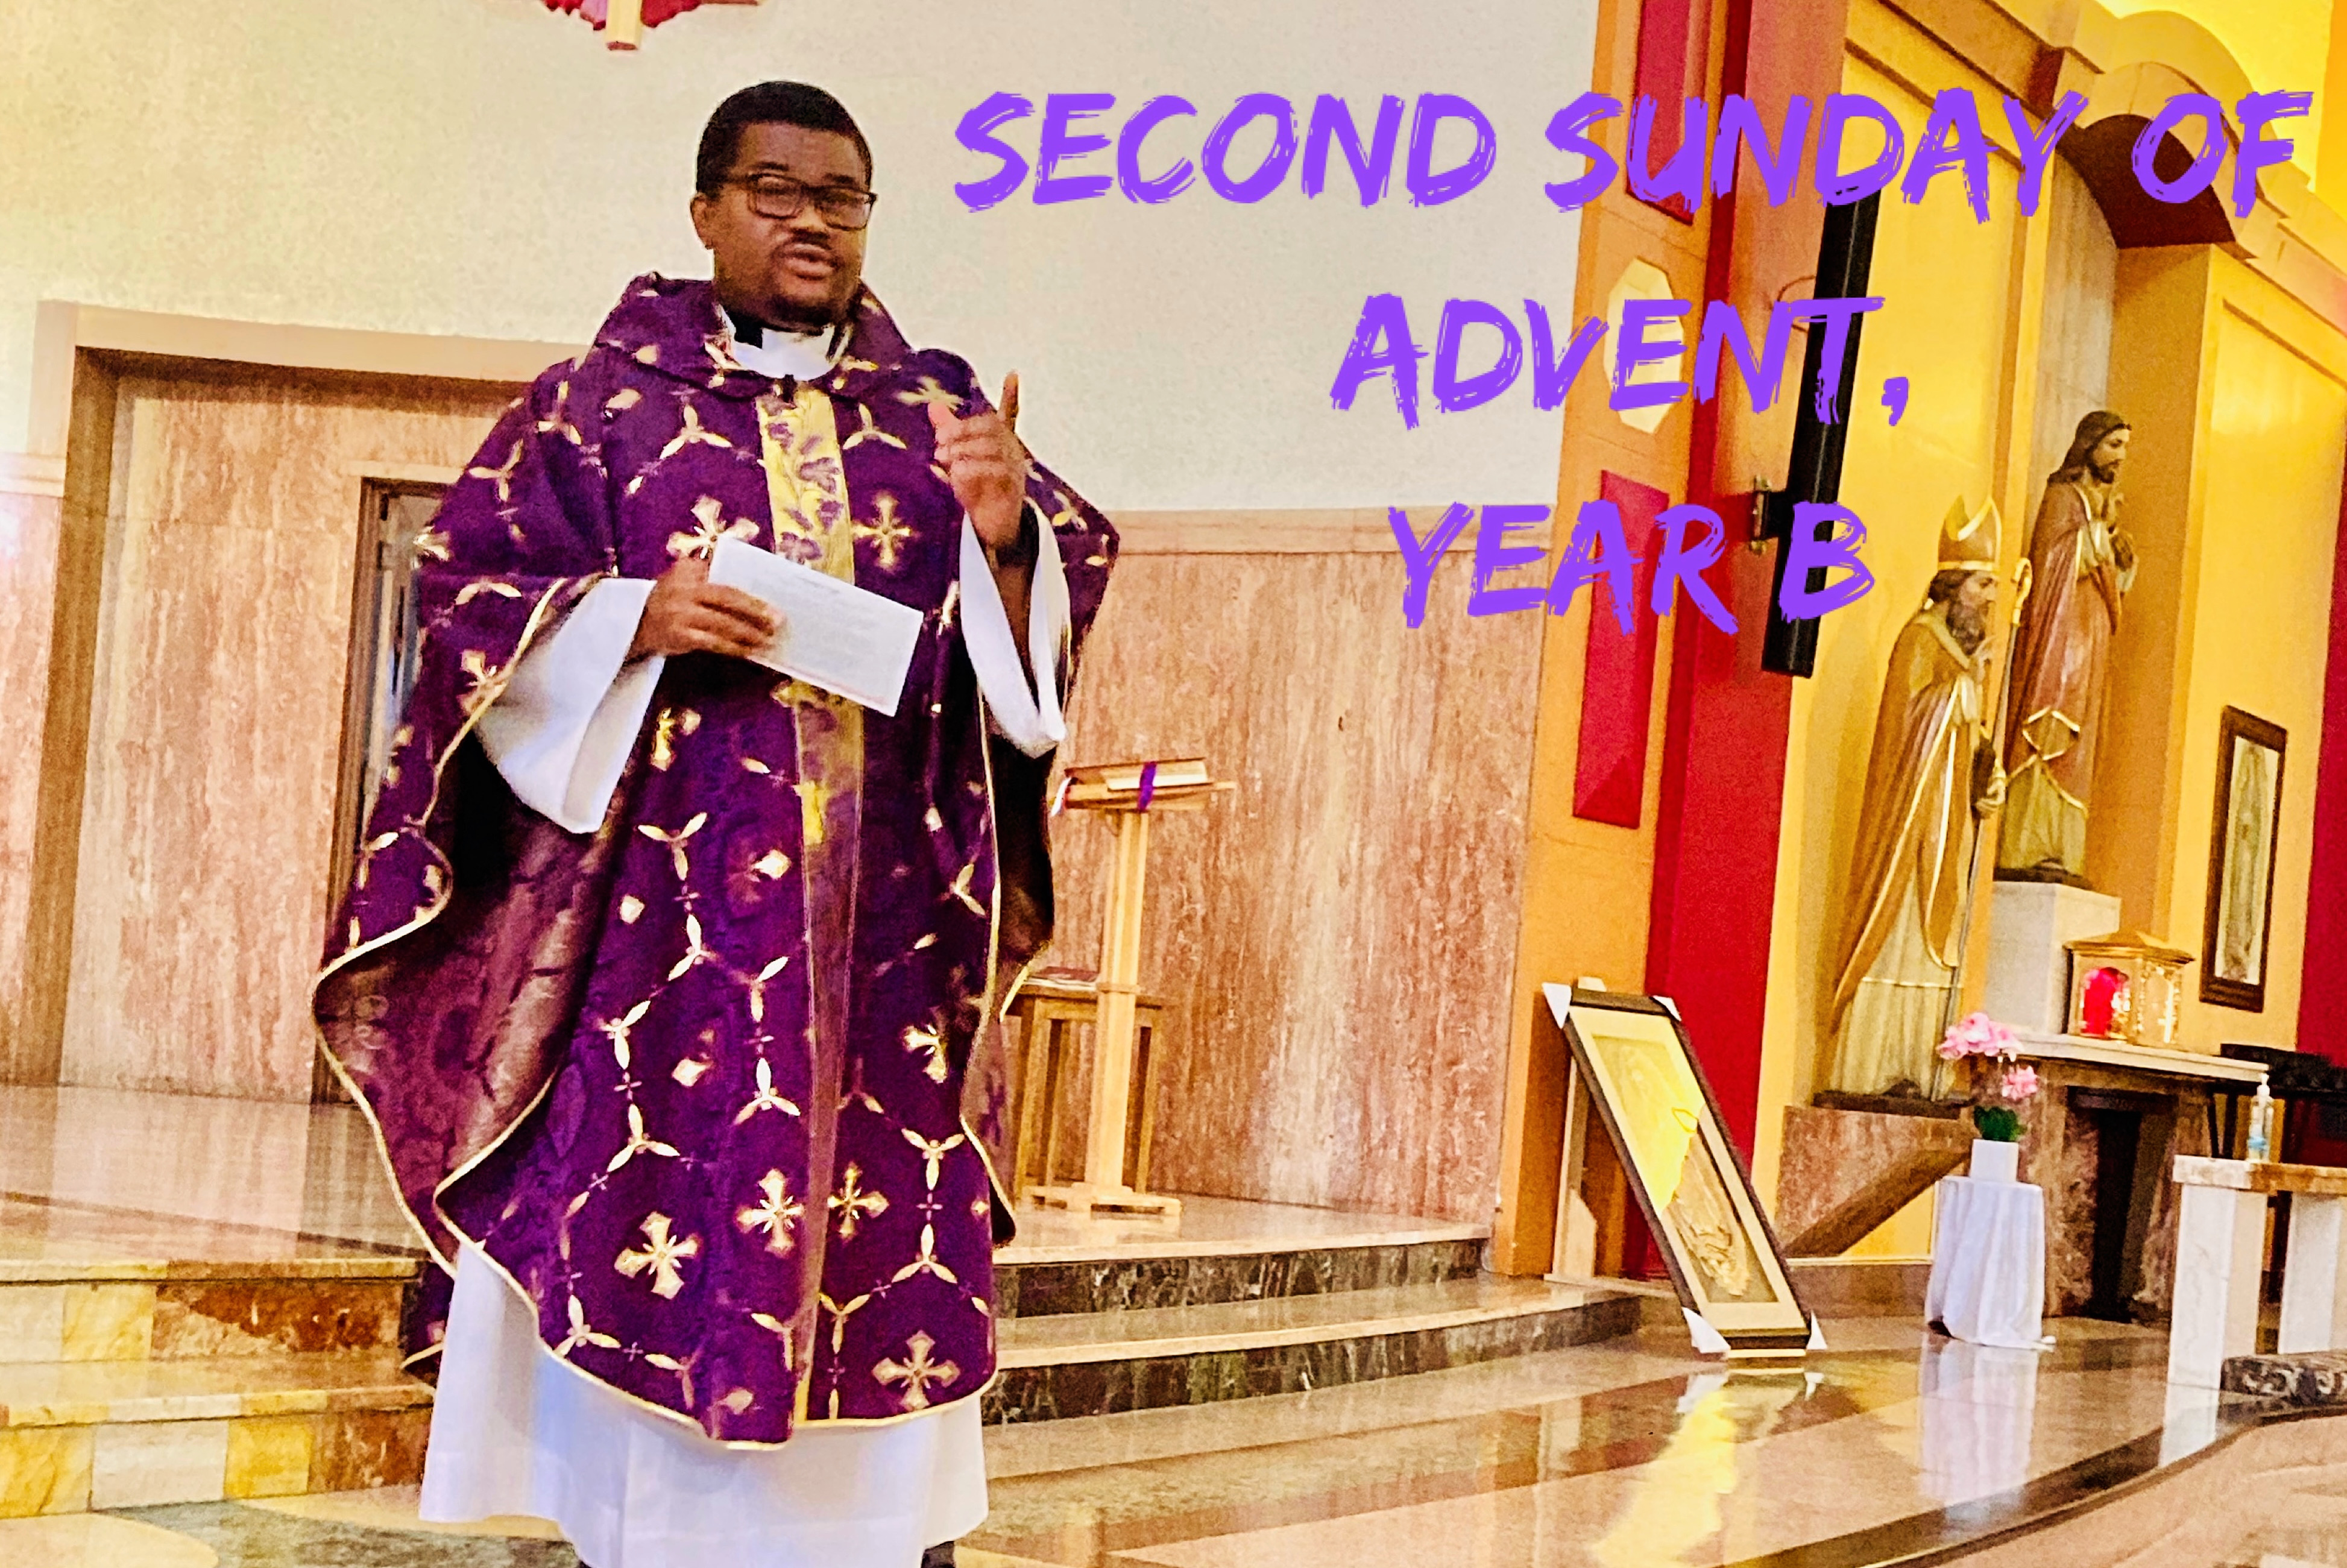 Second Sunday of Advent, Year B